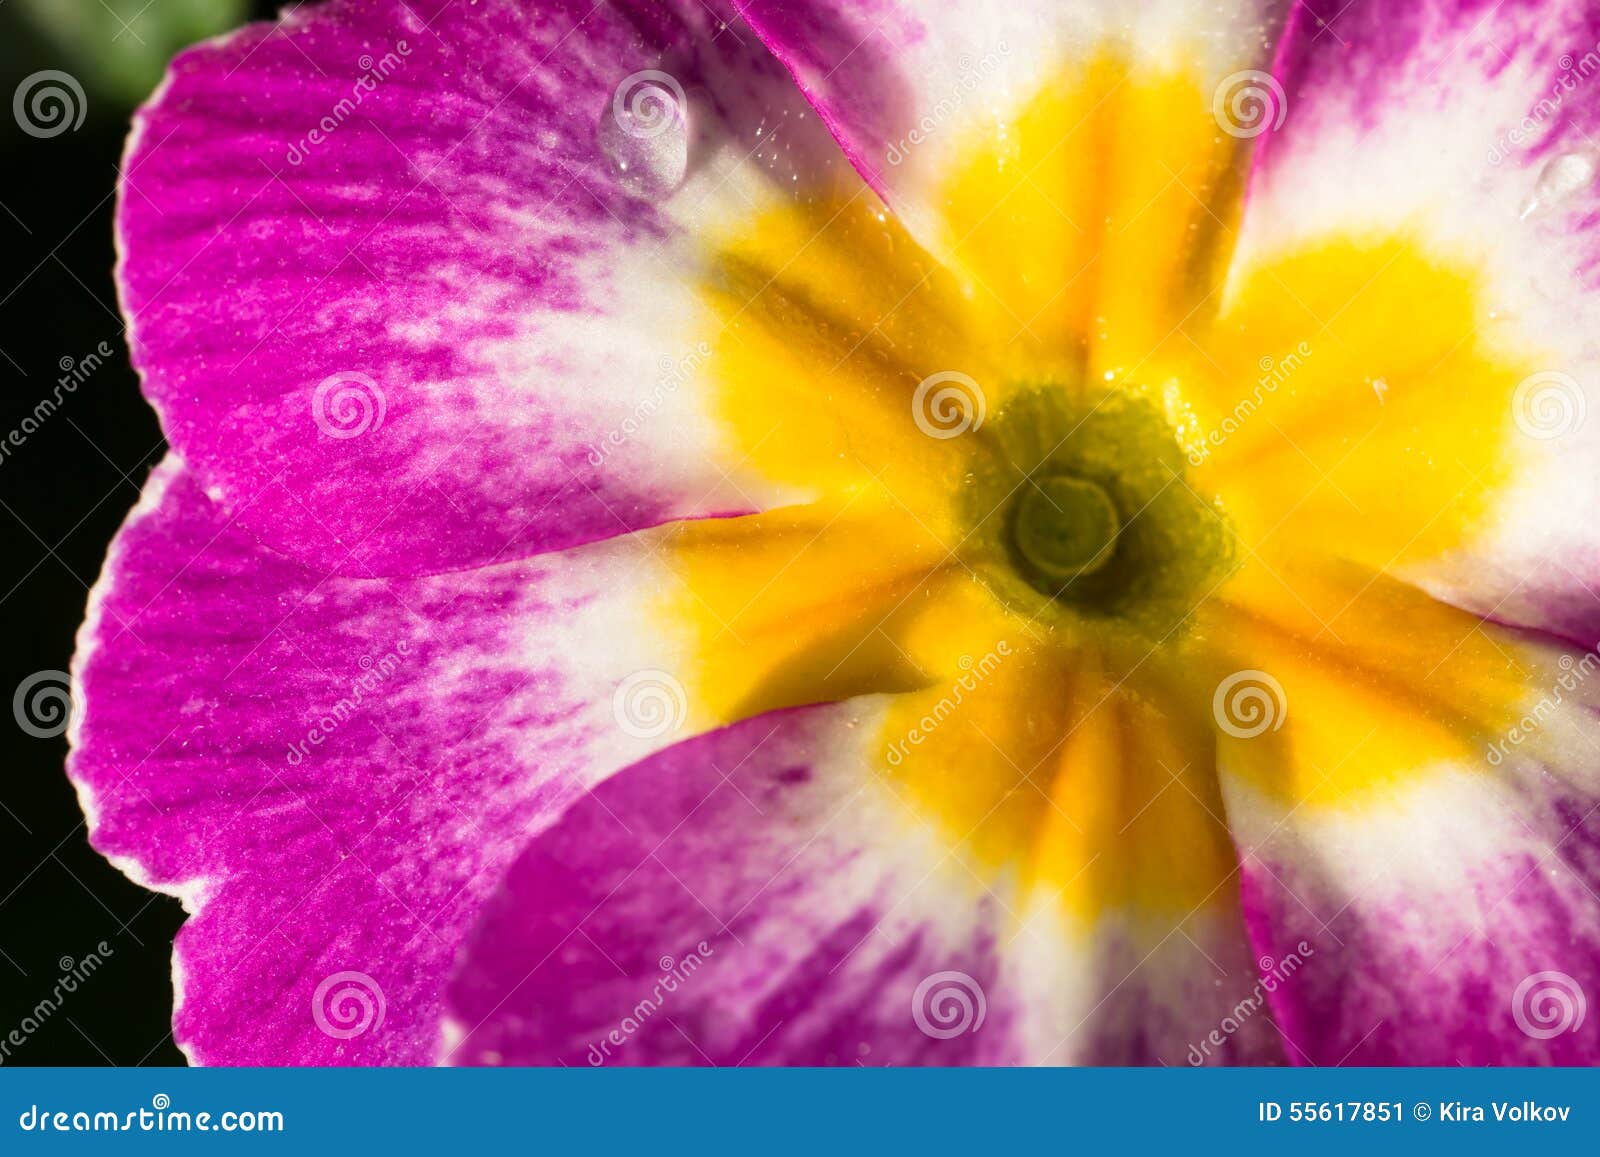 flower of primula primera, close-up